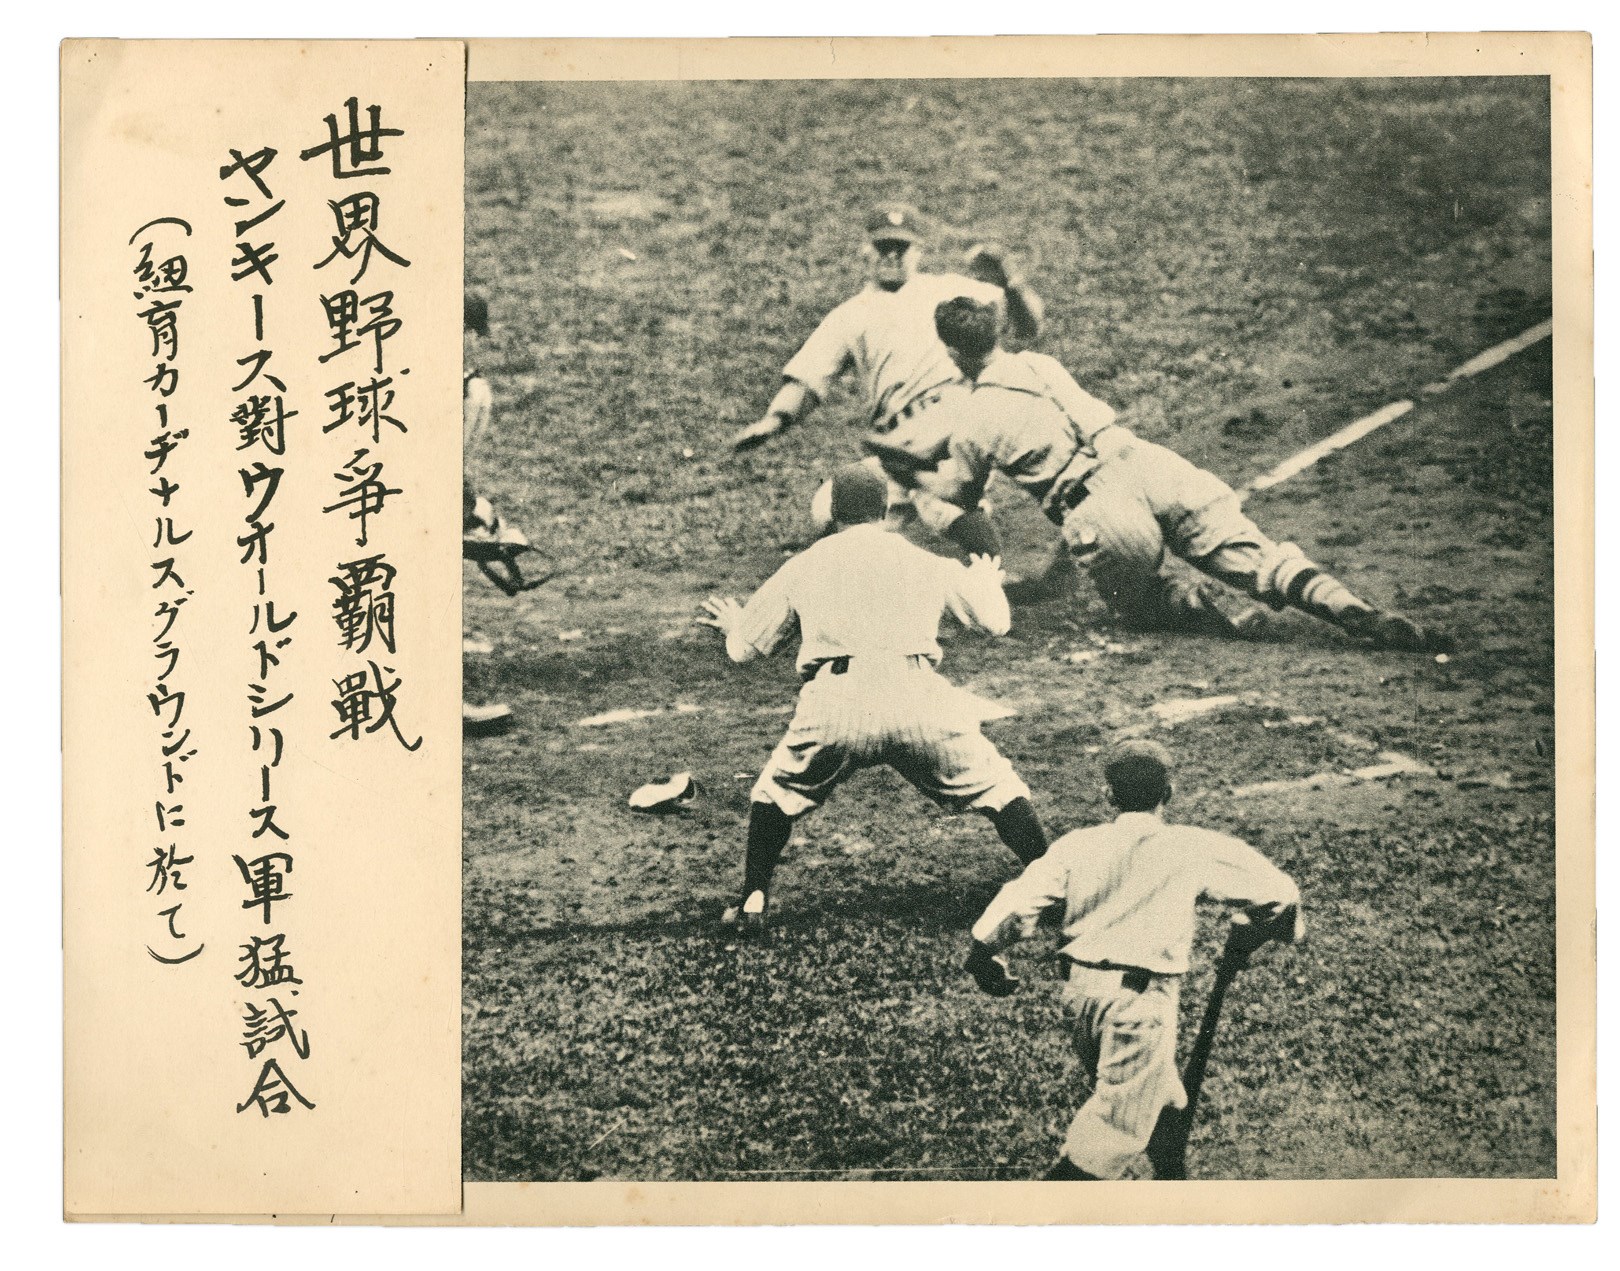 - 1926 World Series Advertising Poster